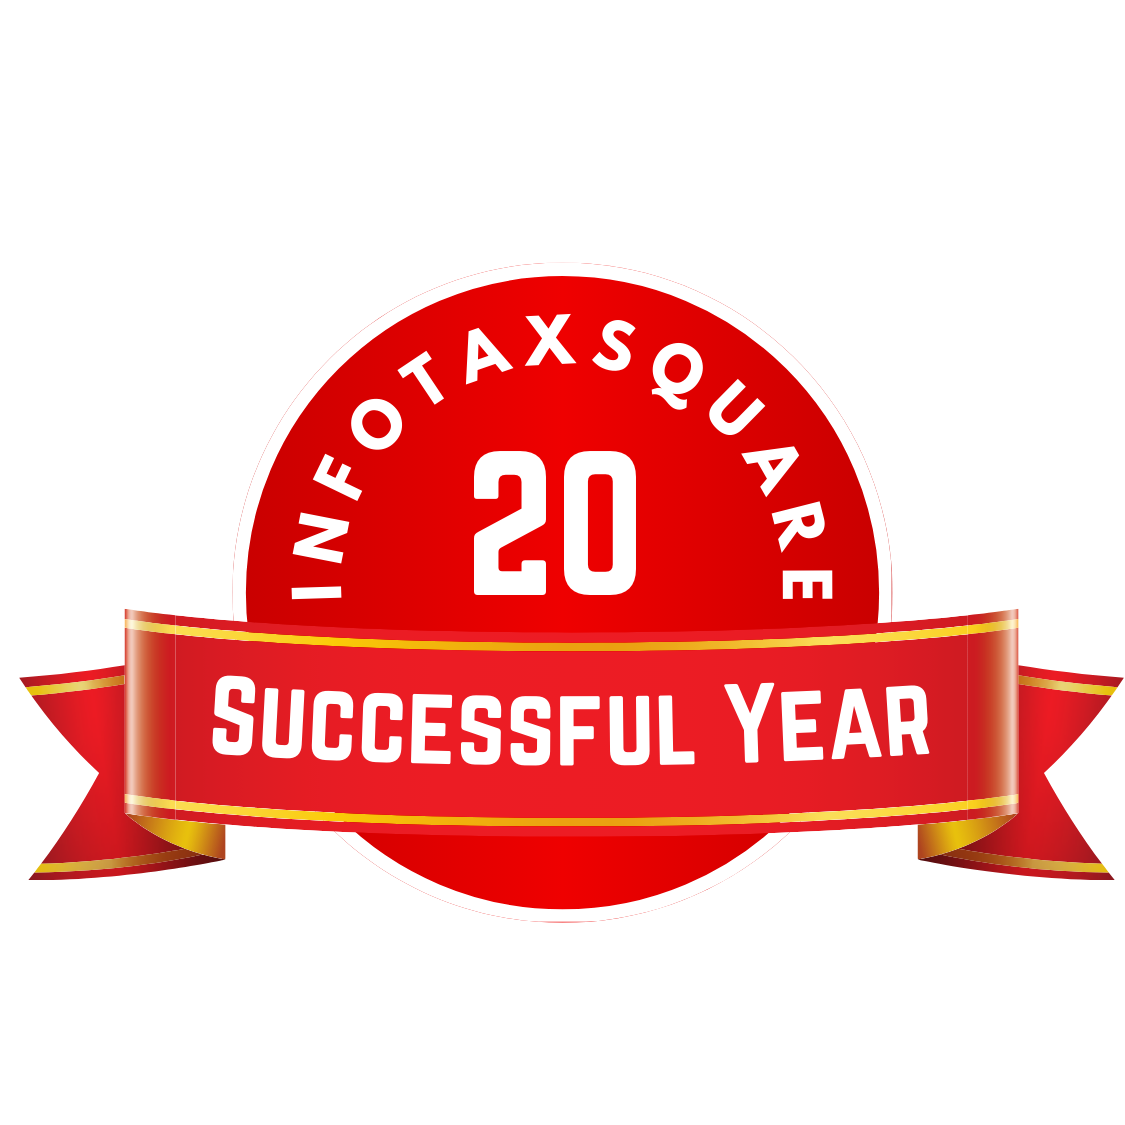 InfoTaxSquare.com - 10 Successful Years